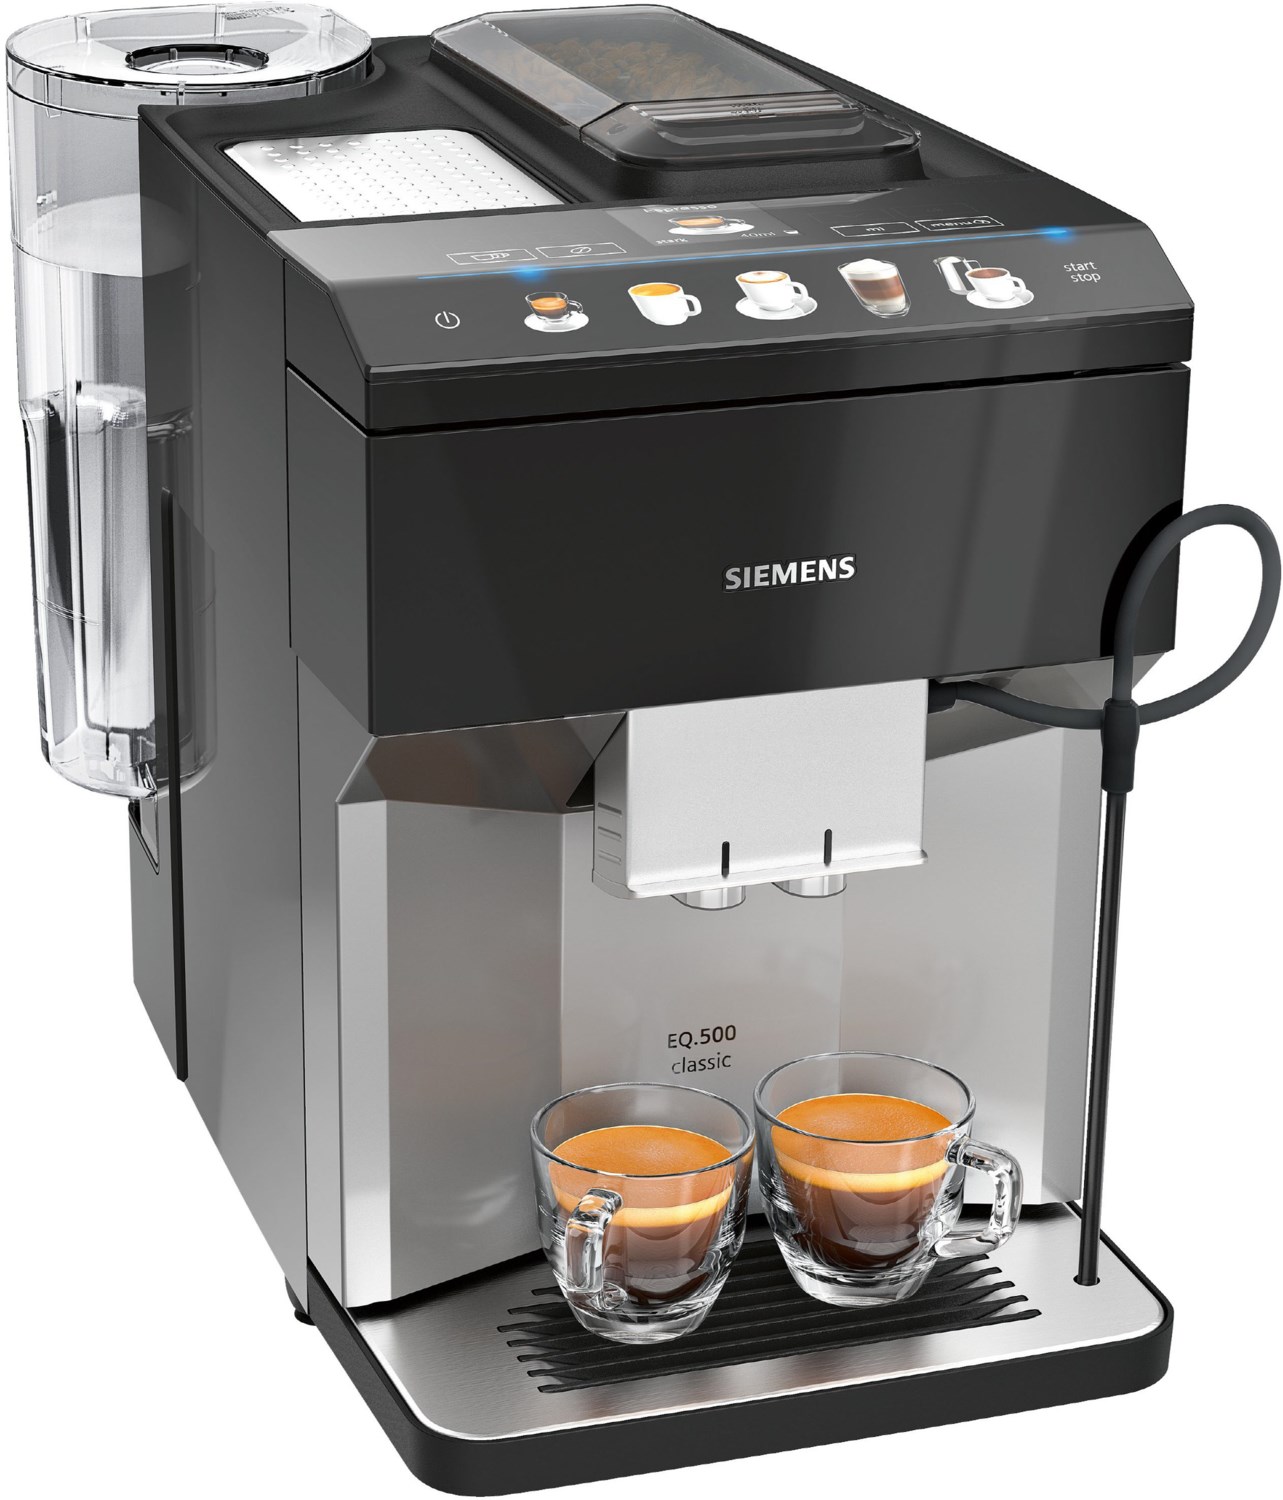 Siemens EQ 500 classic Kaffee-Vollautomat morning haze